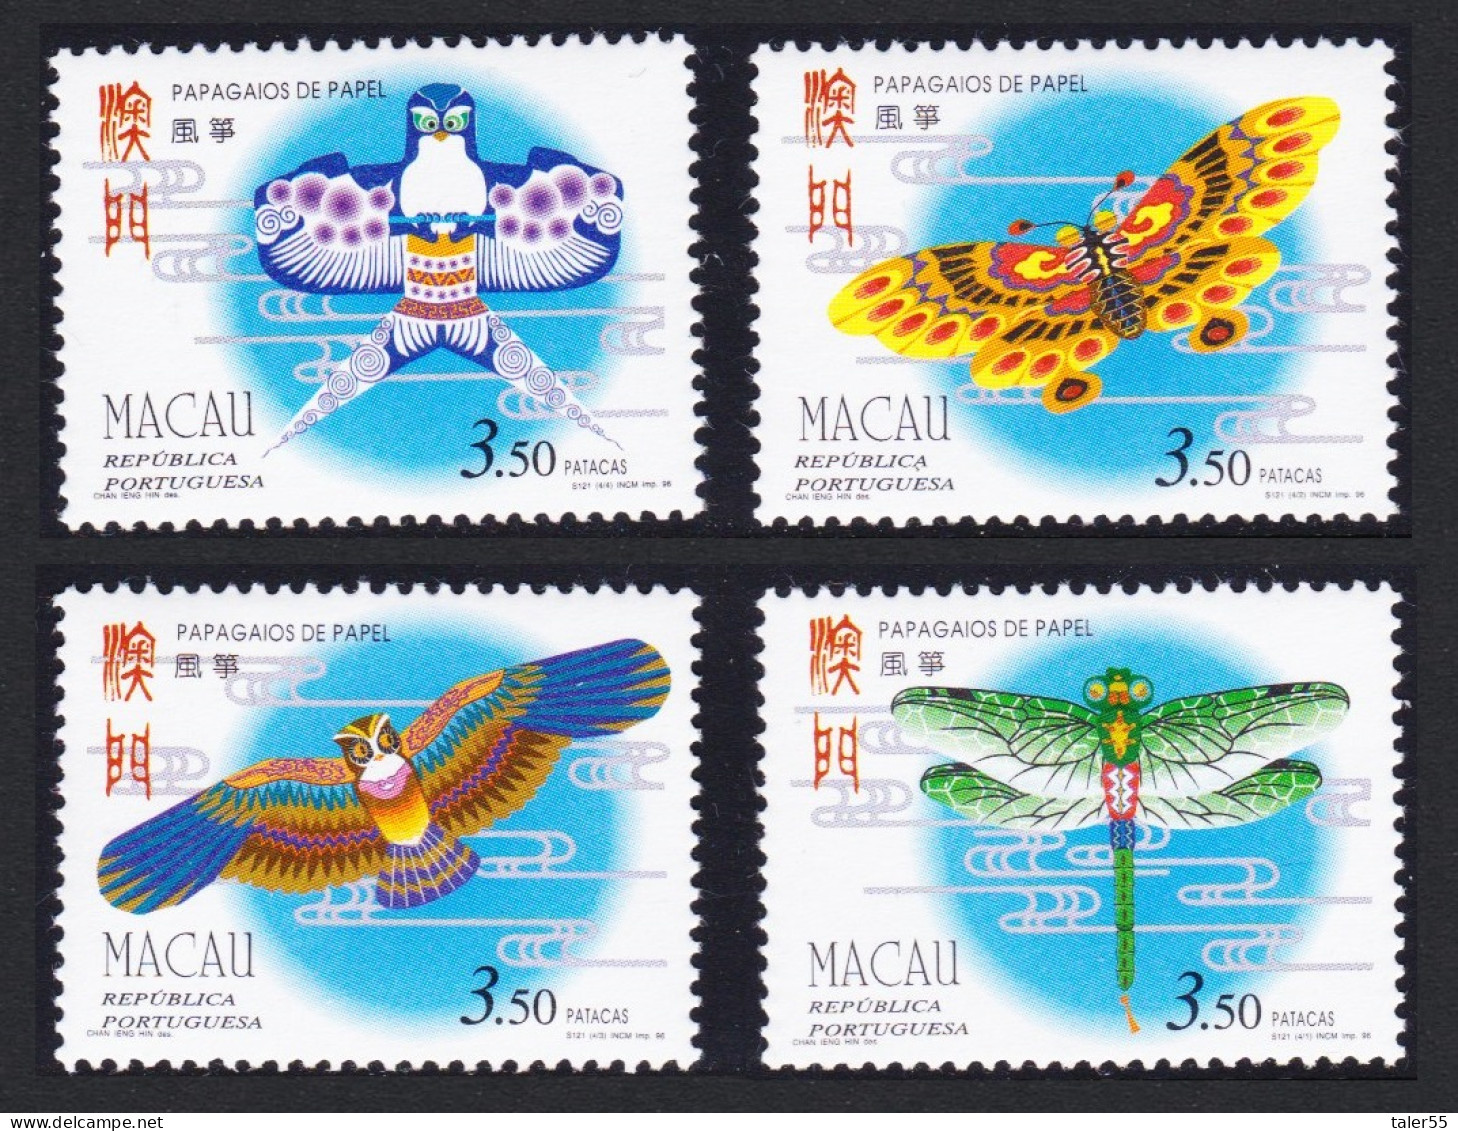 Macao Macau Paper Kites 4v 1996 MNH SG#958-961 Sc#844-847 - Ungebraucht